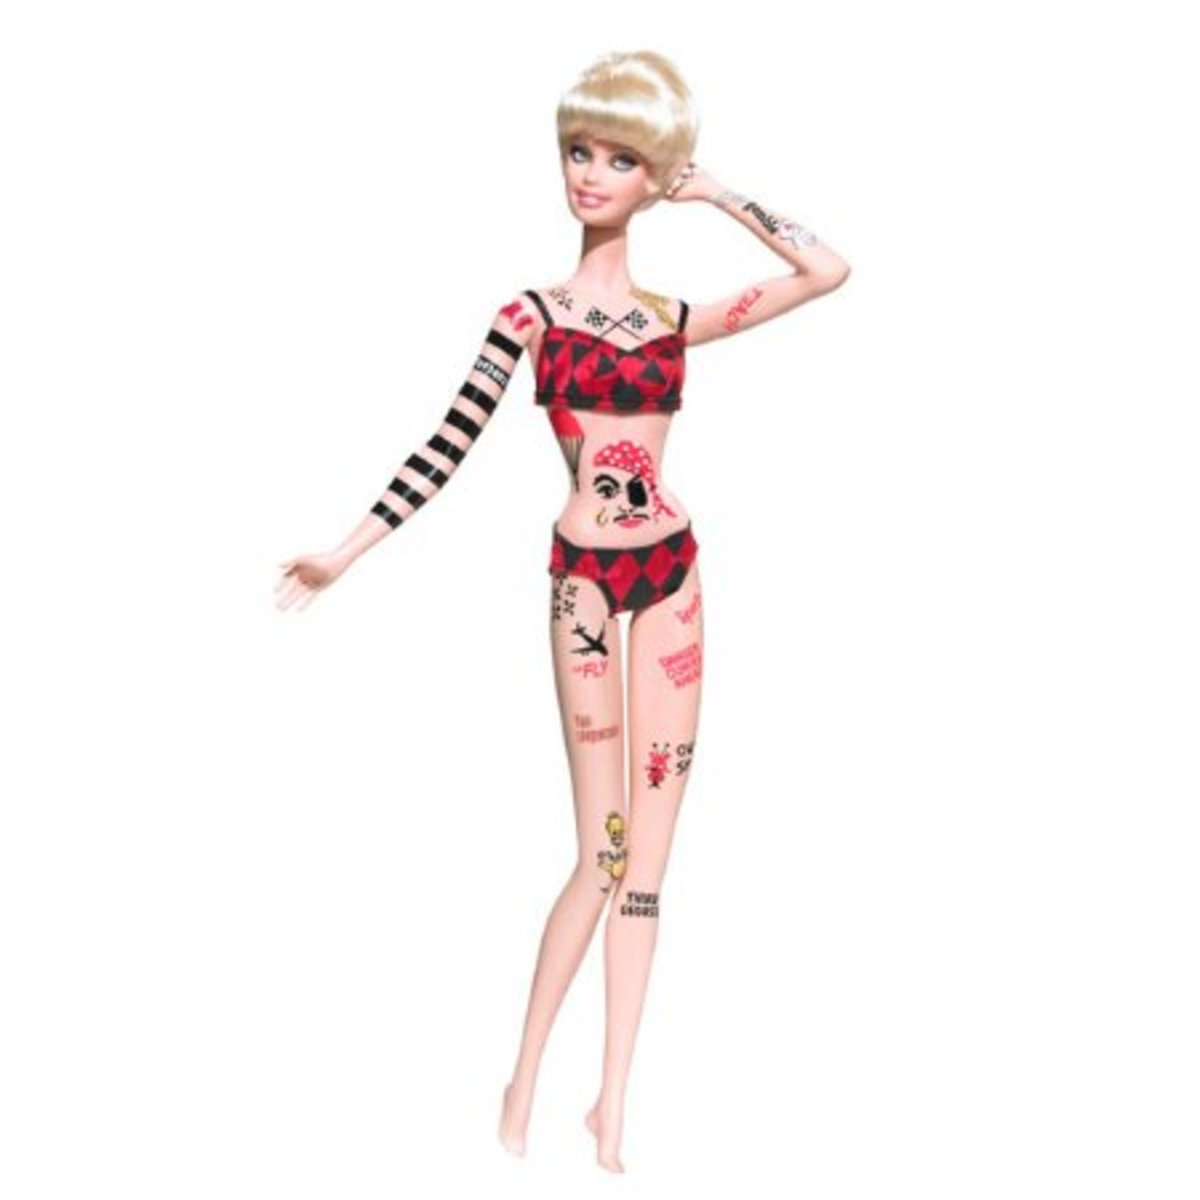 Goldie Hawn Celebrity Barbie Doll